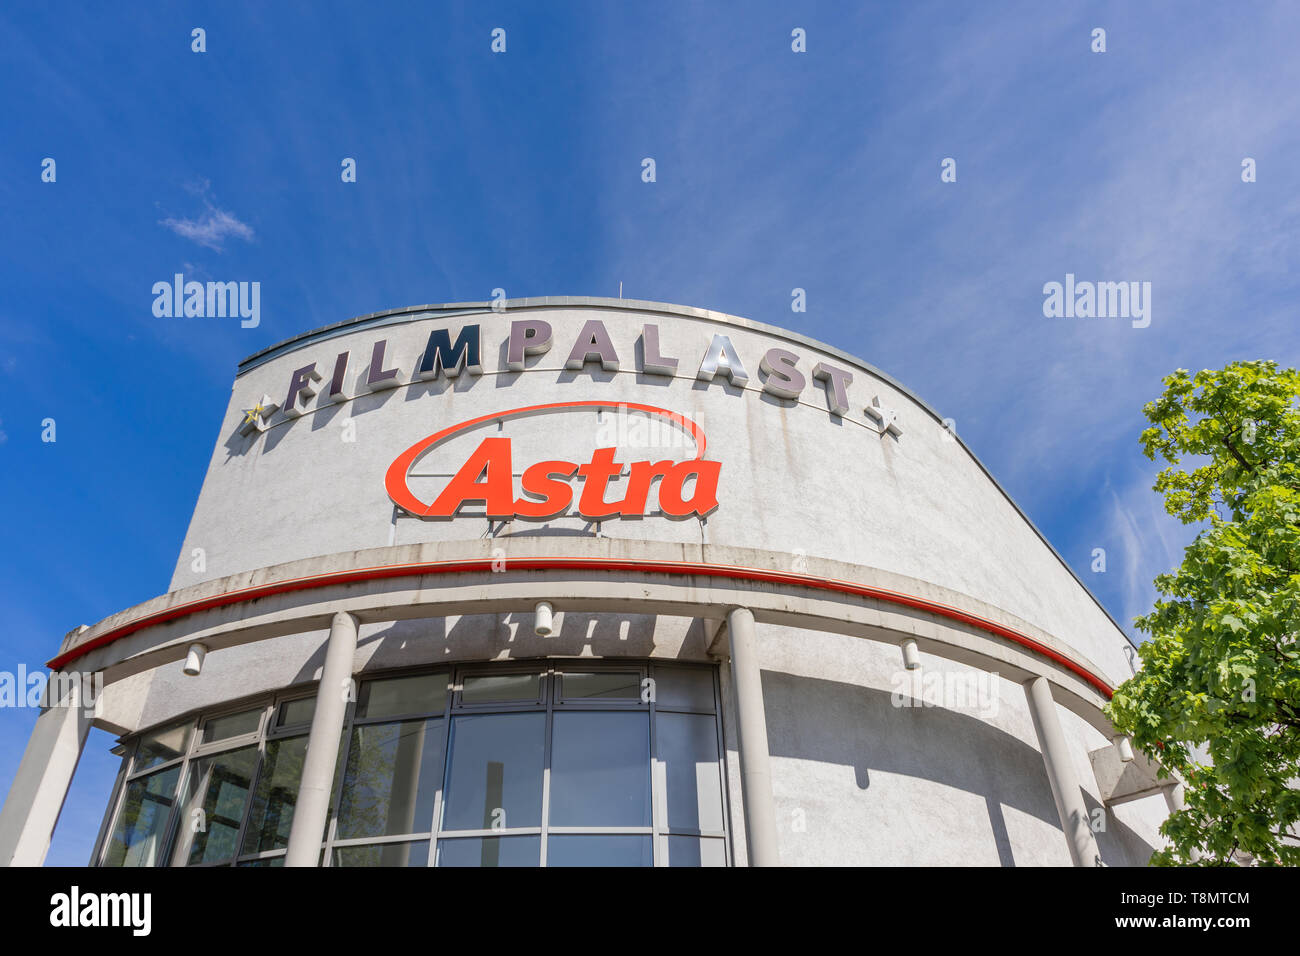 Astra Filmpalast, ein Kino in Berlin Johannisthal, Berlin, Deutschland Stockfoto